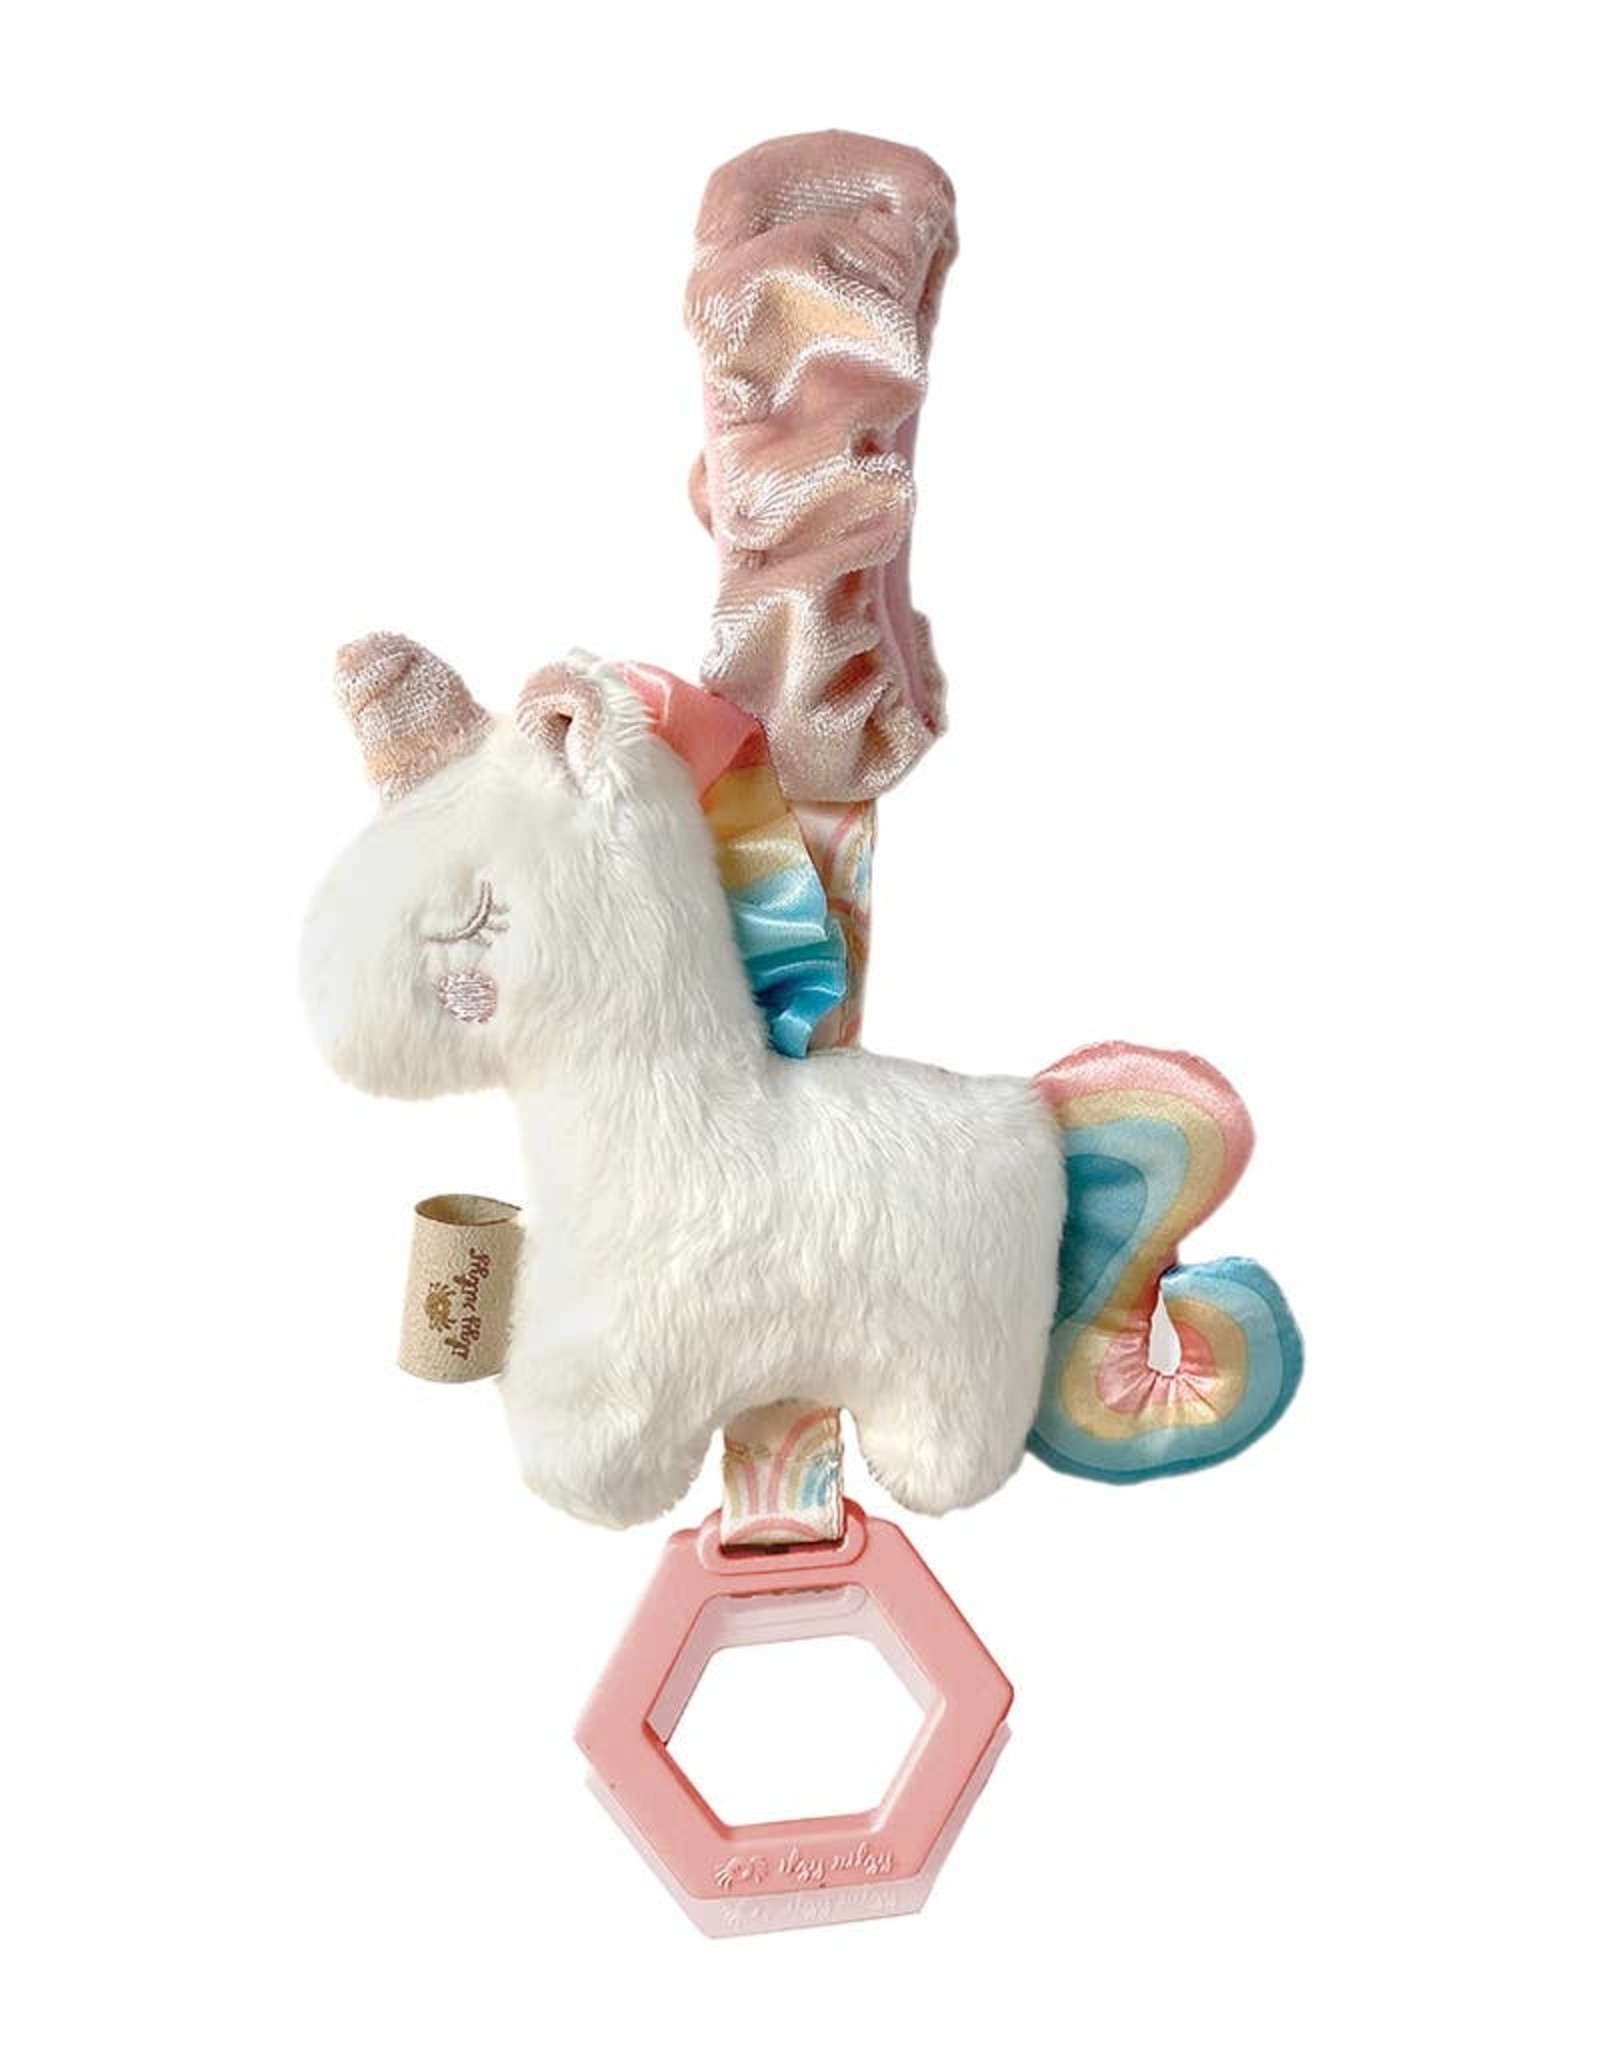 Itzy Ritzy Ritzy Jingle™ Unicorn Attachable Travel Toy